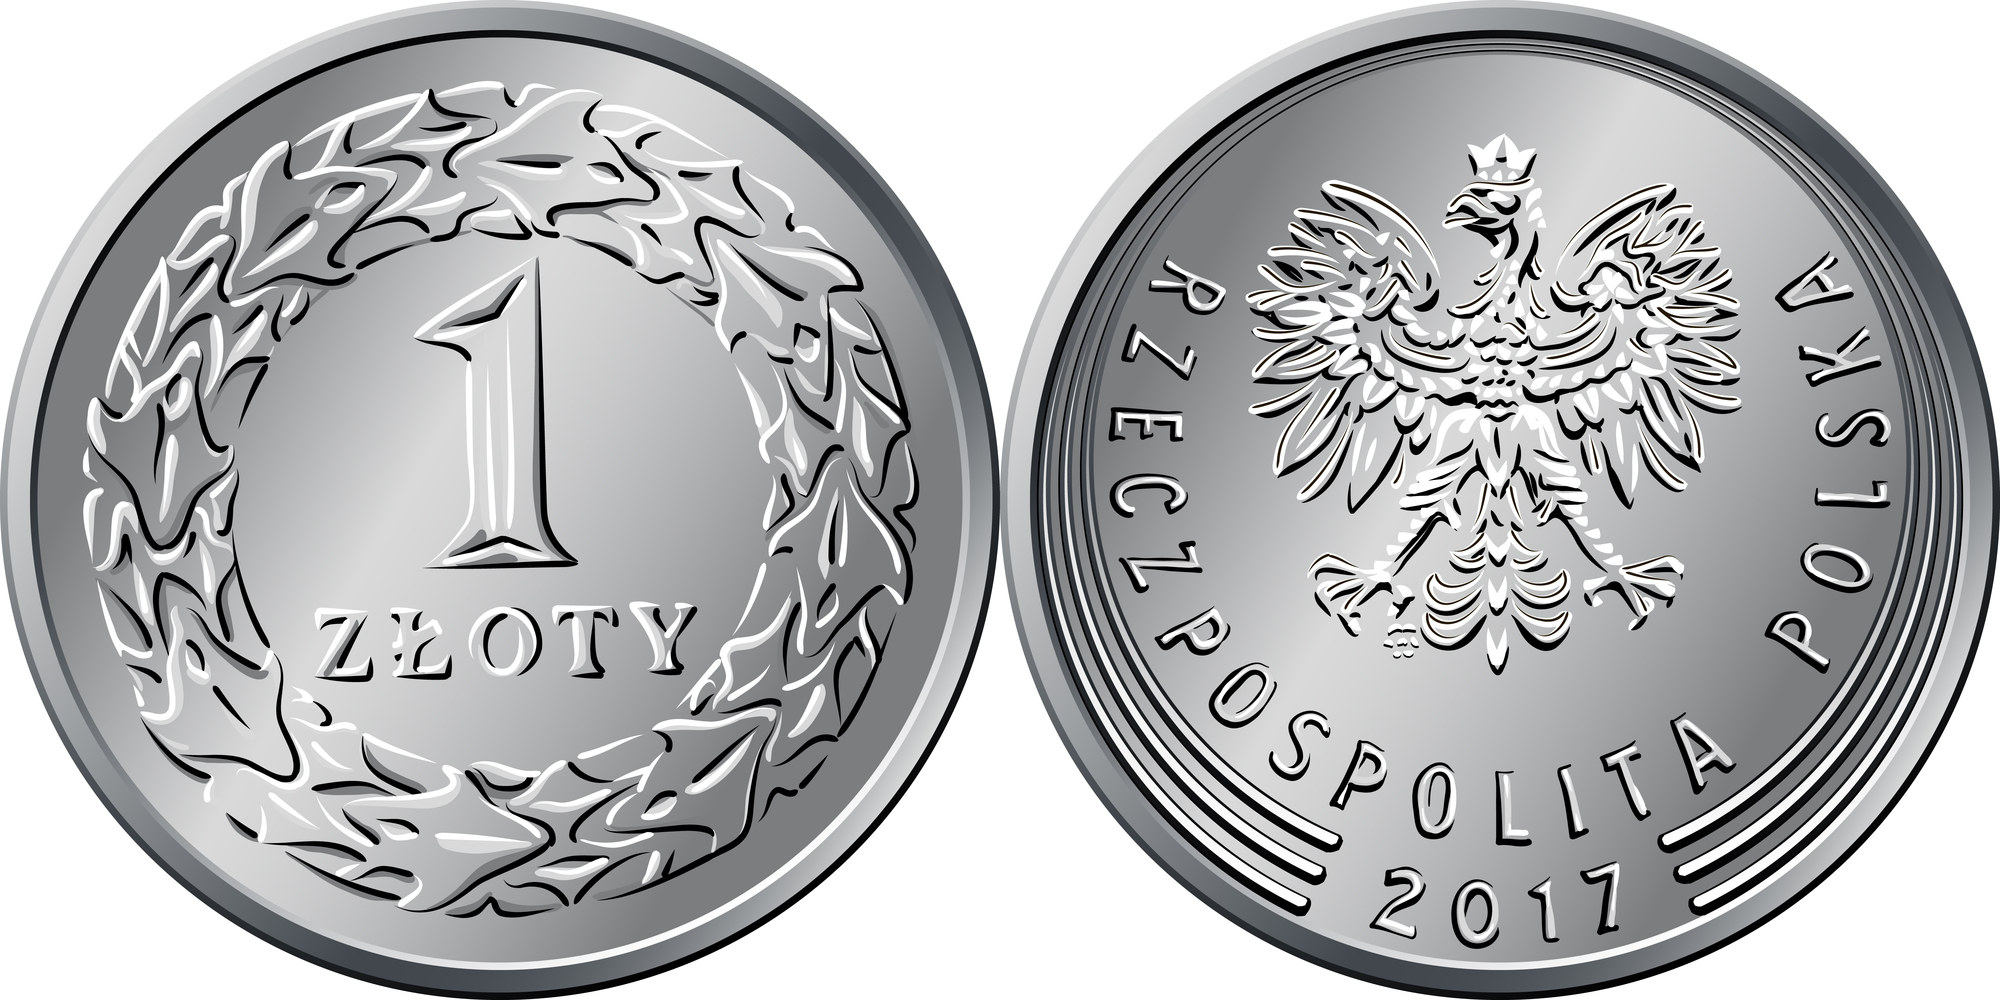 50-groszy-coin-poland-currency-money